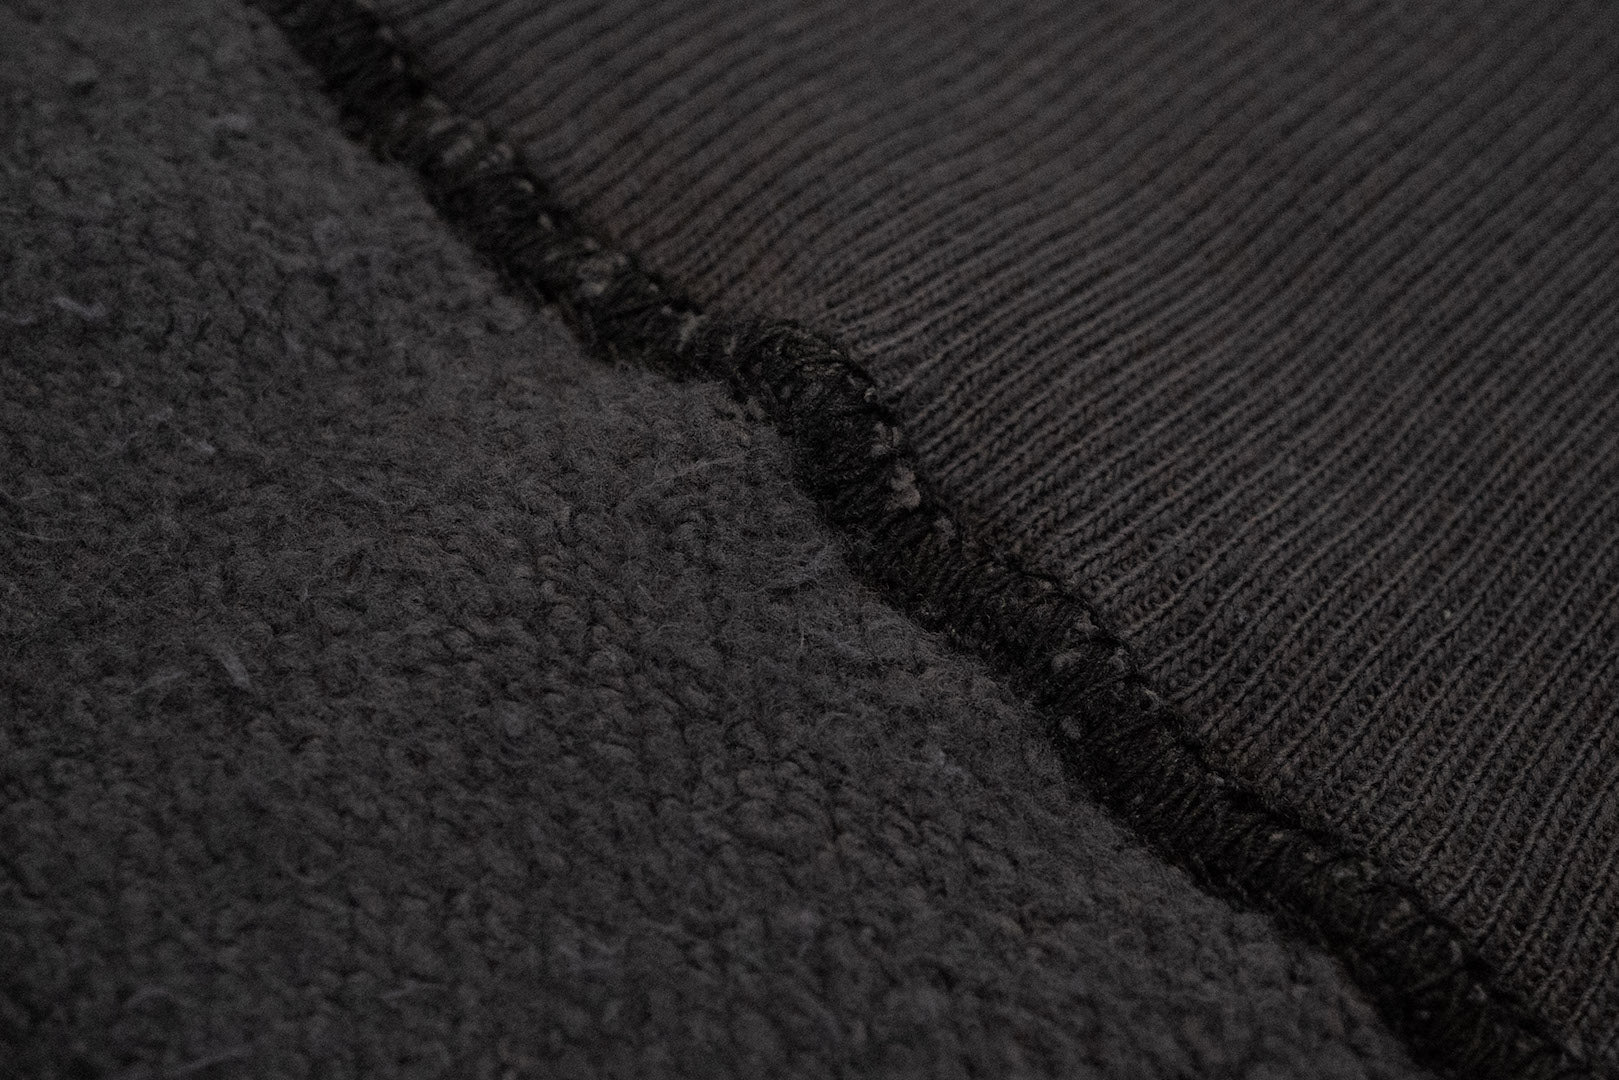 Warehouse Lot.403 10oz "Set-in Sleeves" Loopwheeled Sweatshirt (Black)